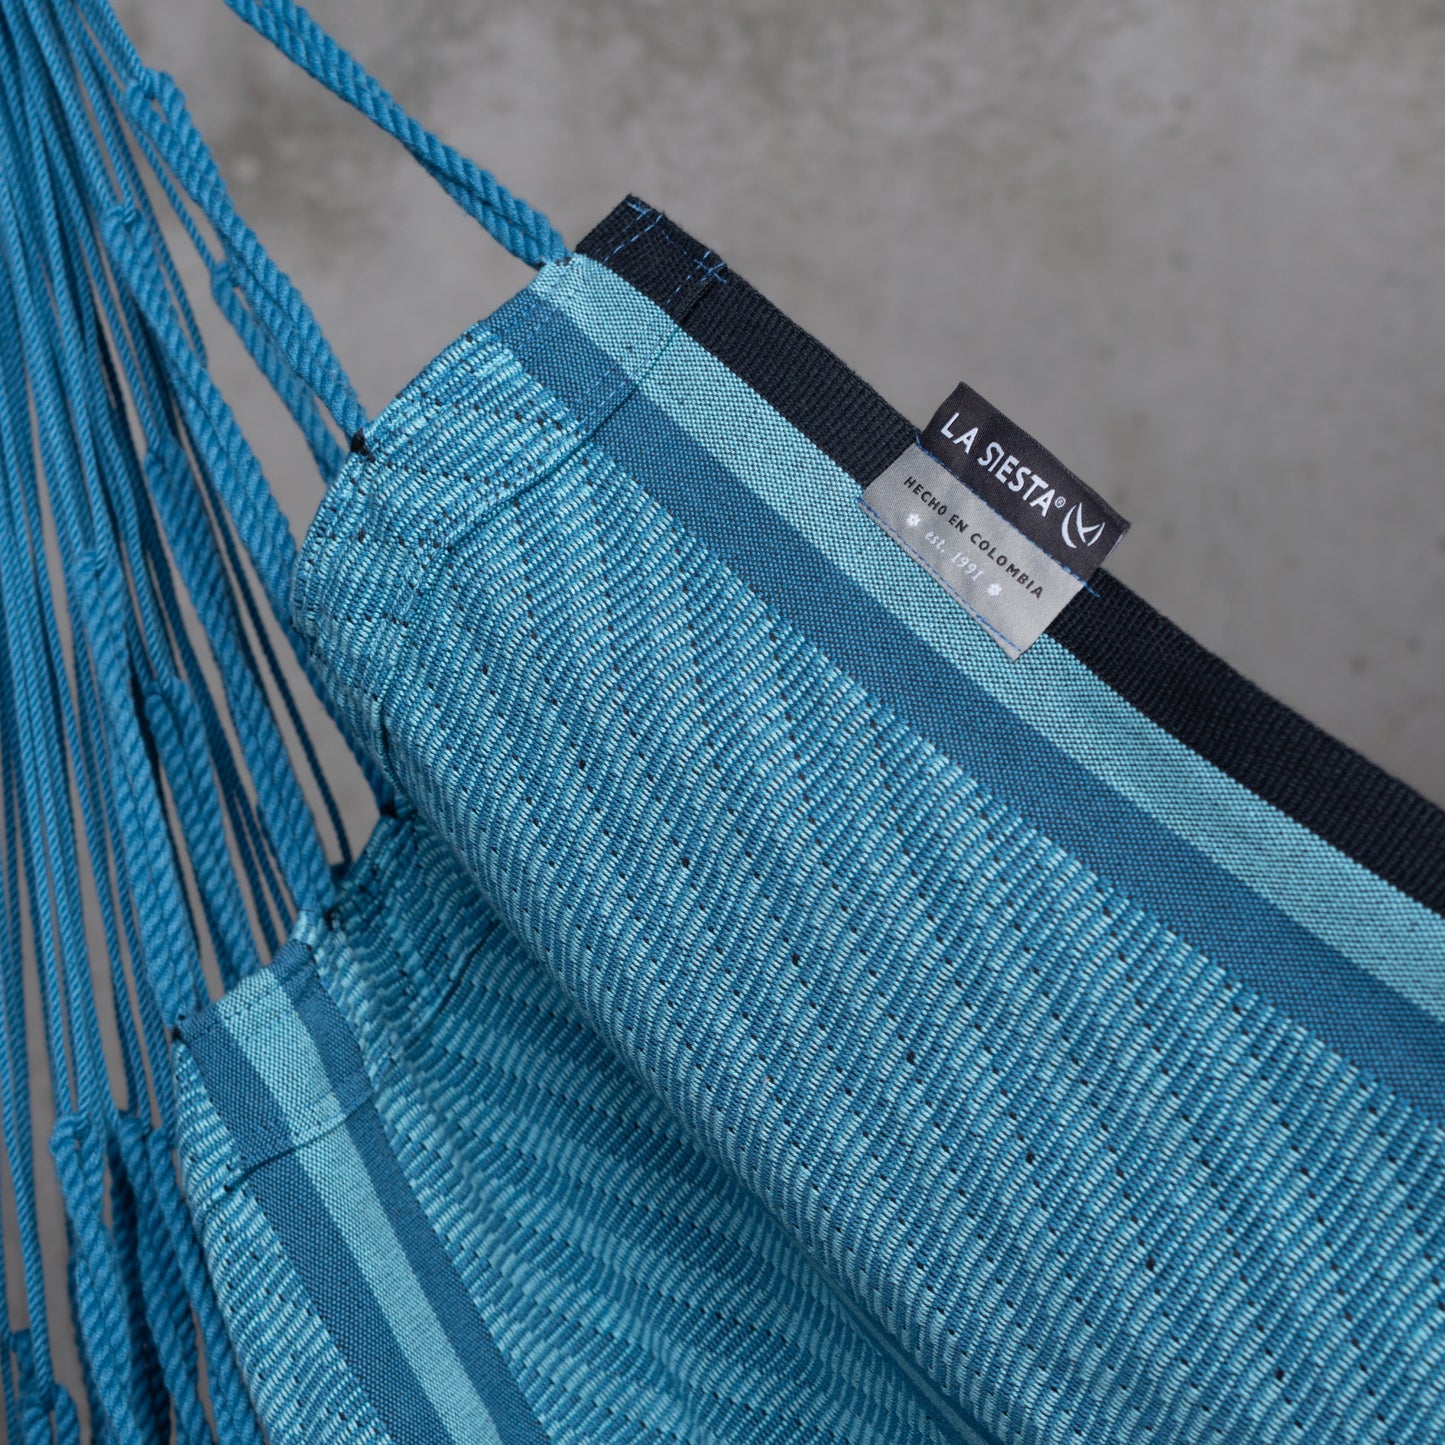 Habana Blue Zebra - Silla colgante comfort de algodón orgánico